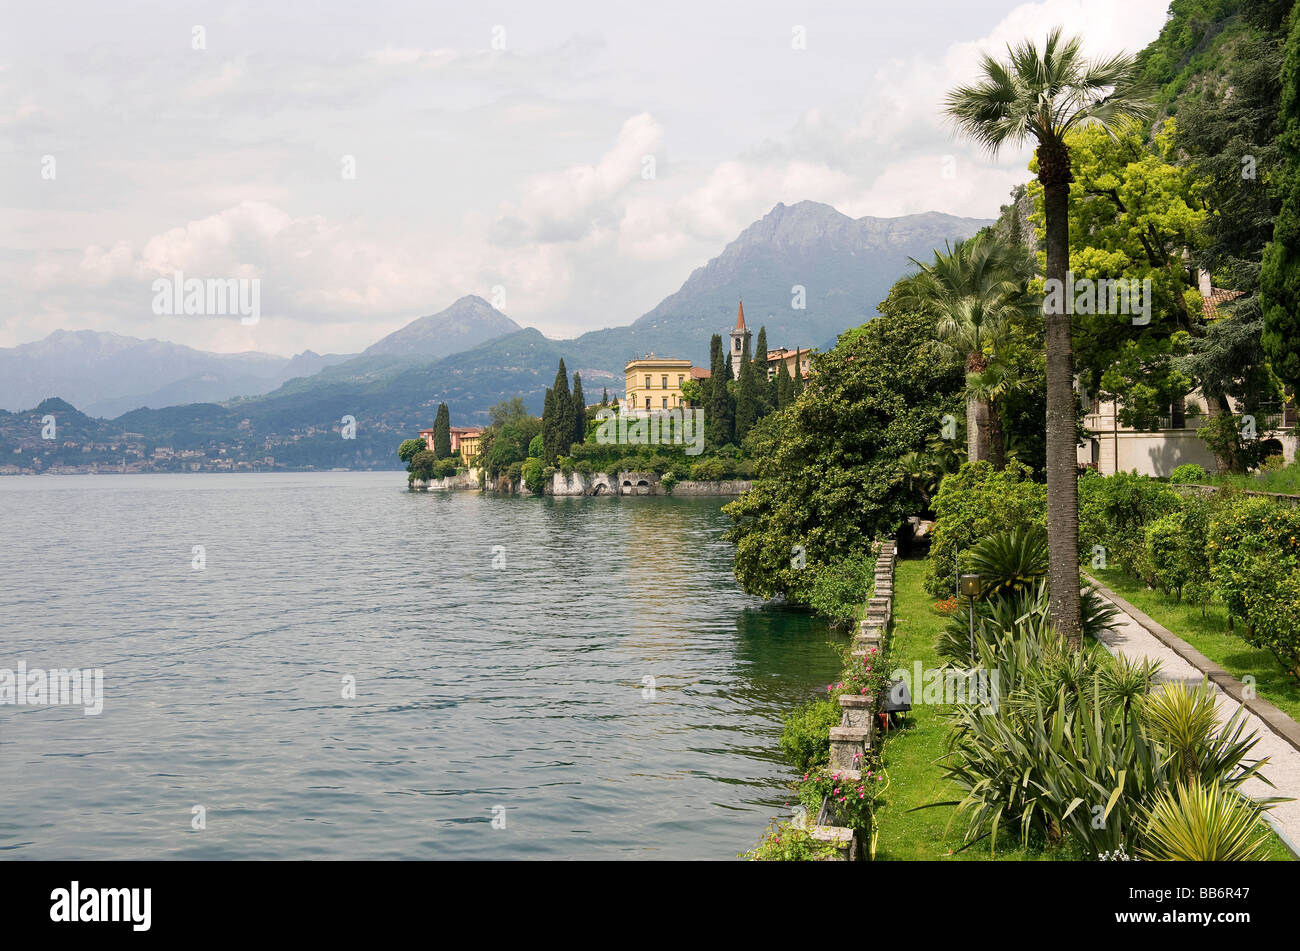 Jardín en villa Monastero, Varenna, el lago de Como, Italia Foto de stock